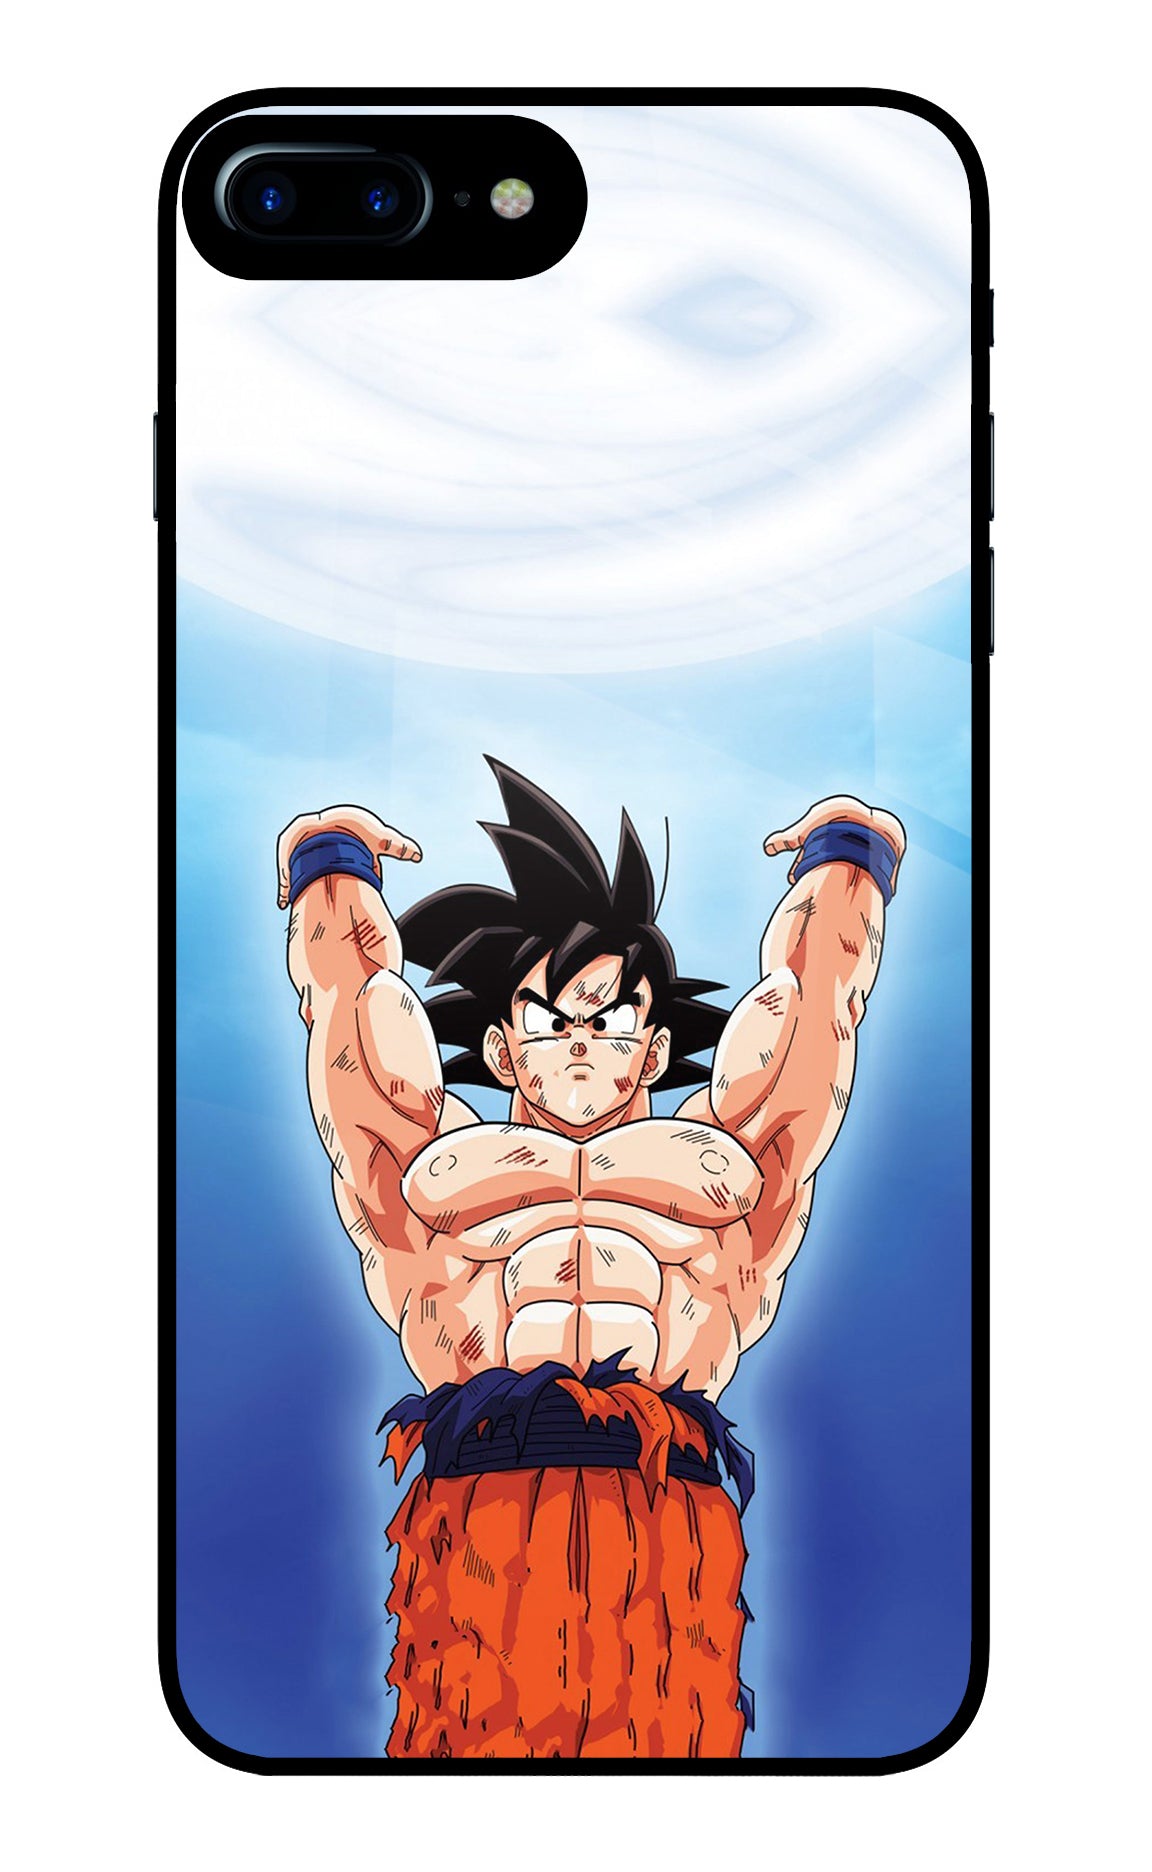 Goku Power iPhone 7 Plus Glass Case